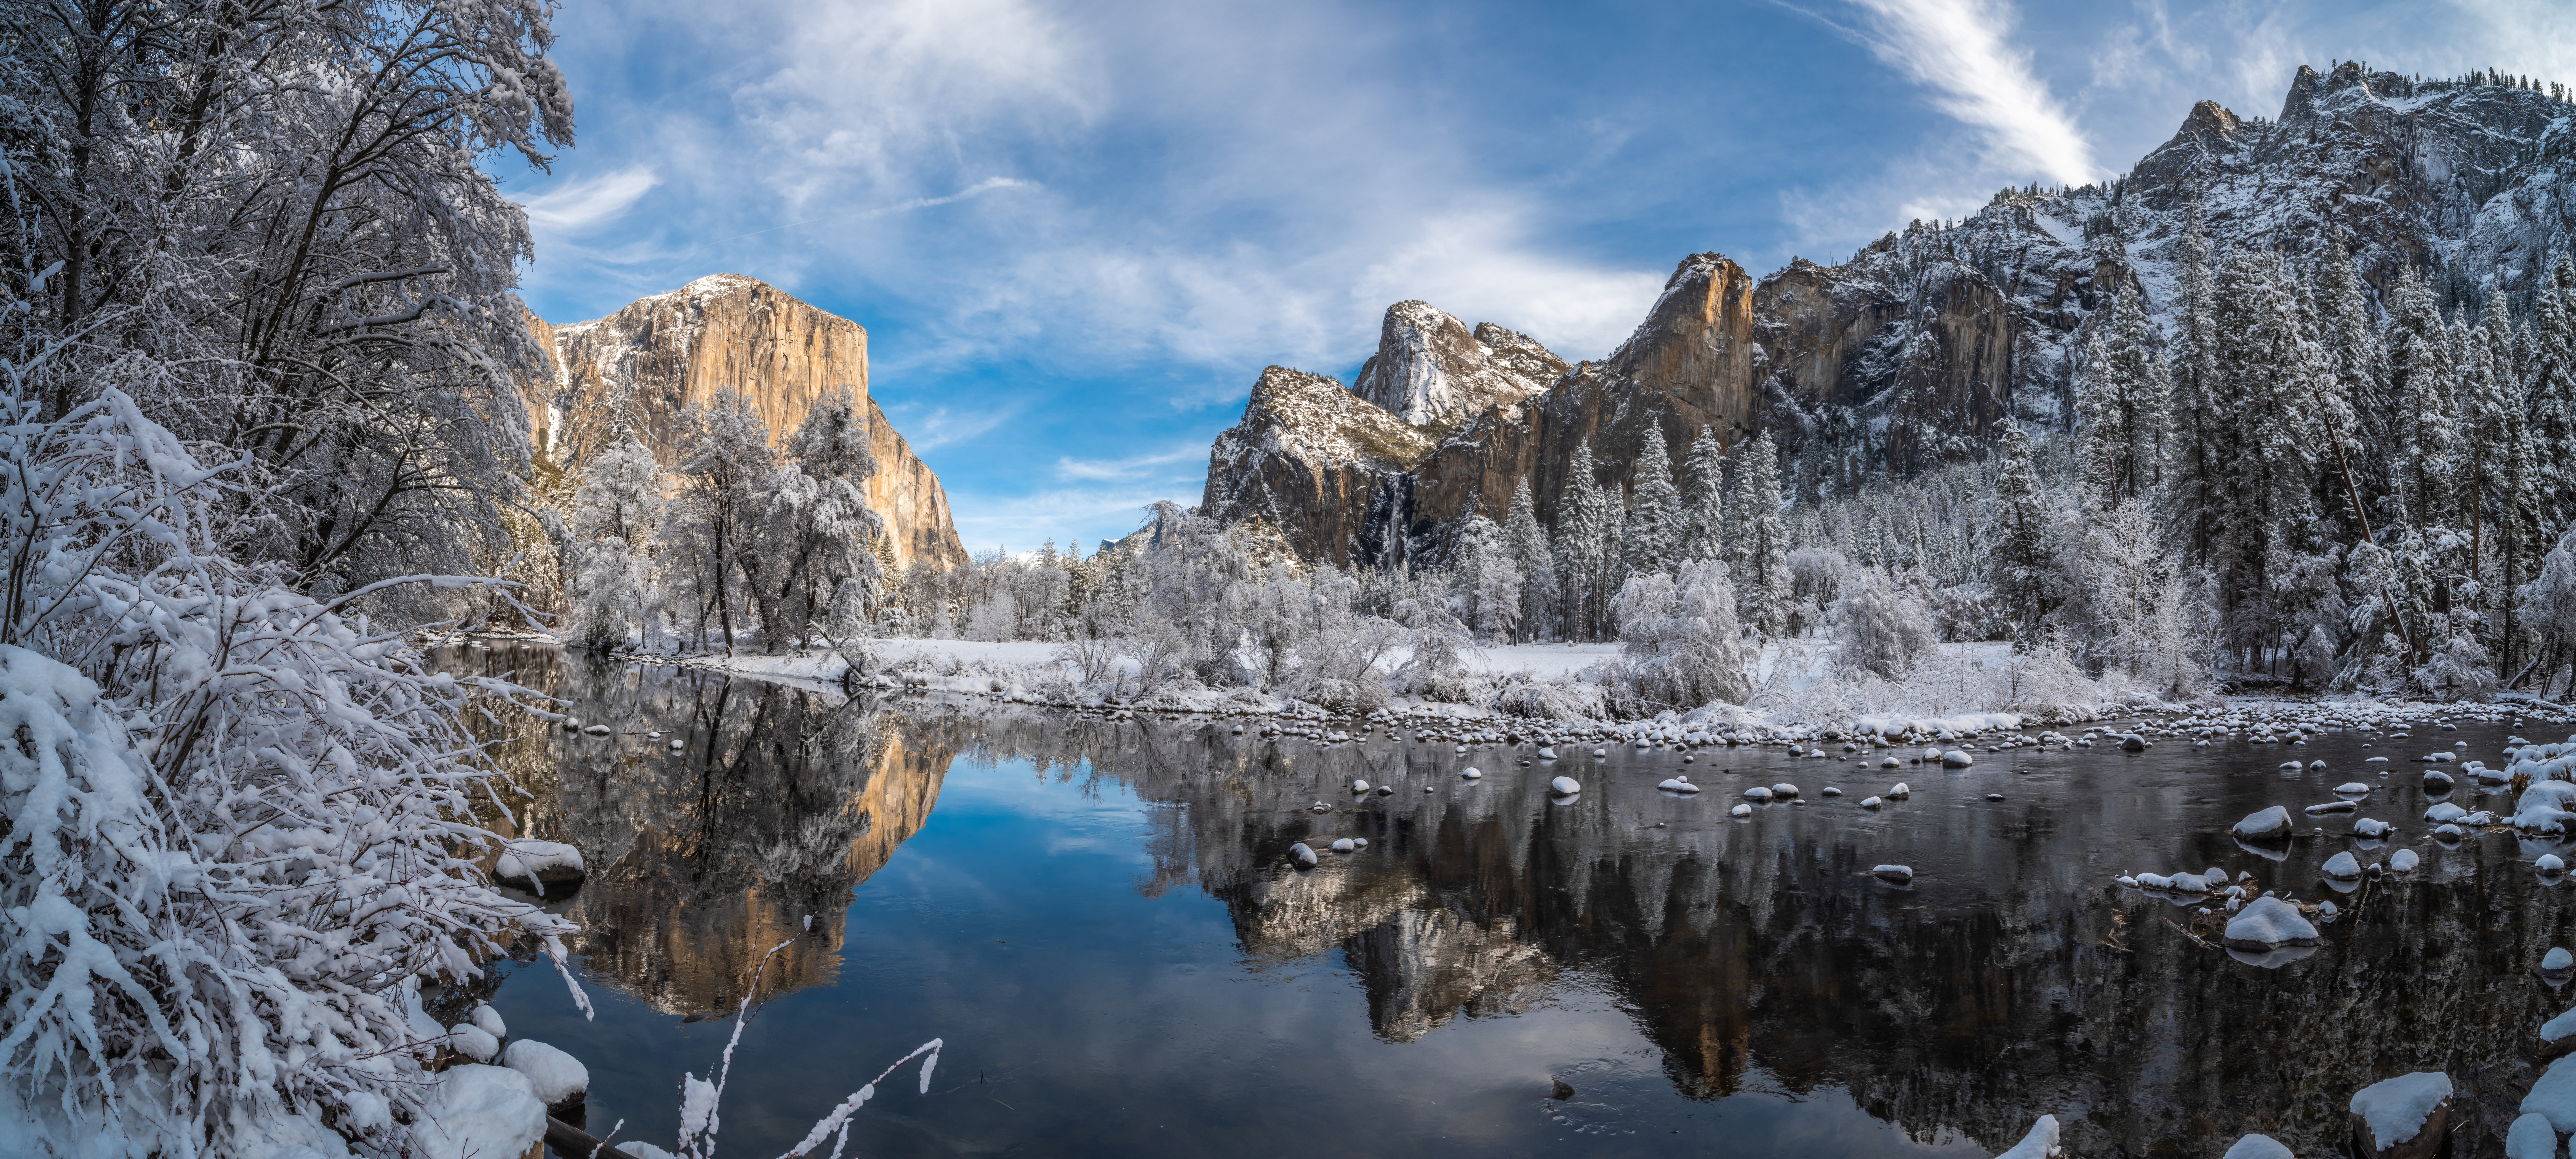 Wallpapers winter parks Yosemite winter scenery on the desktop